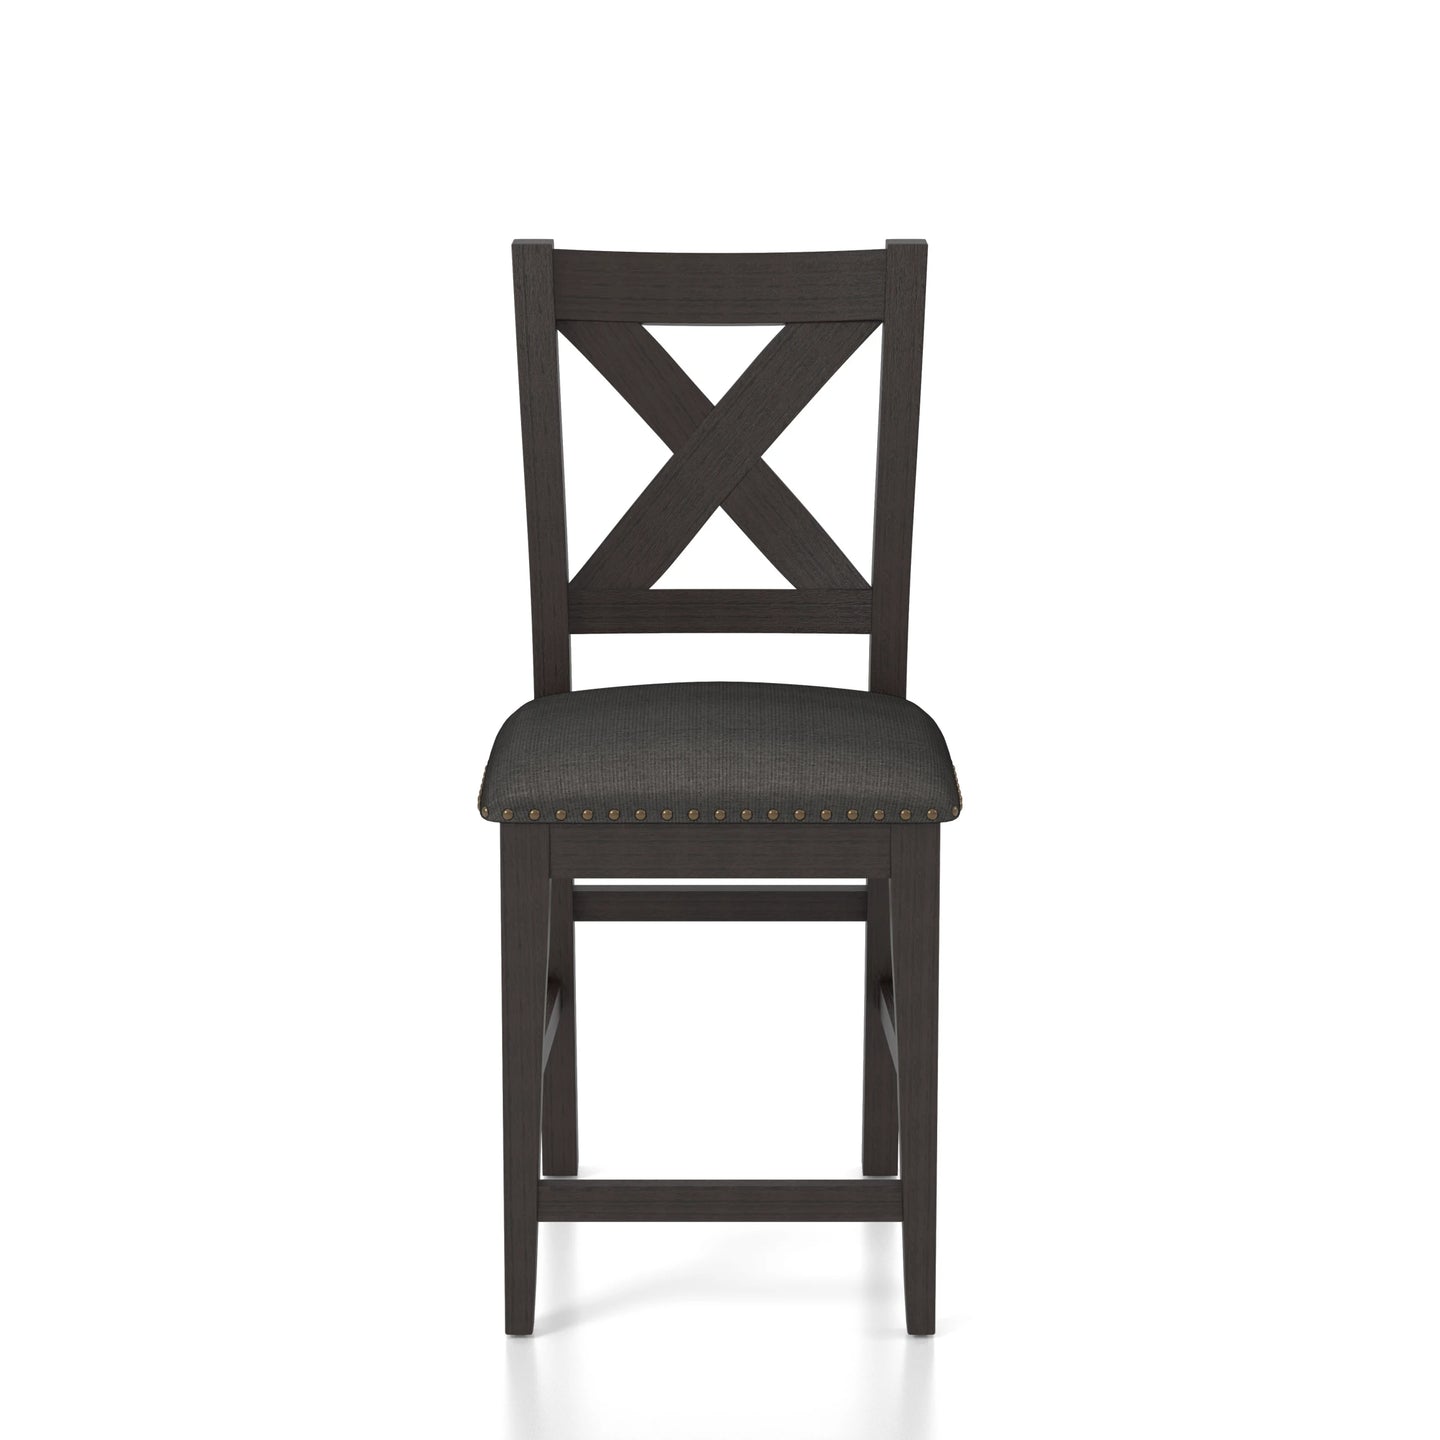 Furniture of America Larkridge X-Cross Back Counter Height Chairs (Set of 2) - IDF-3153GY-PC